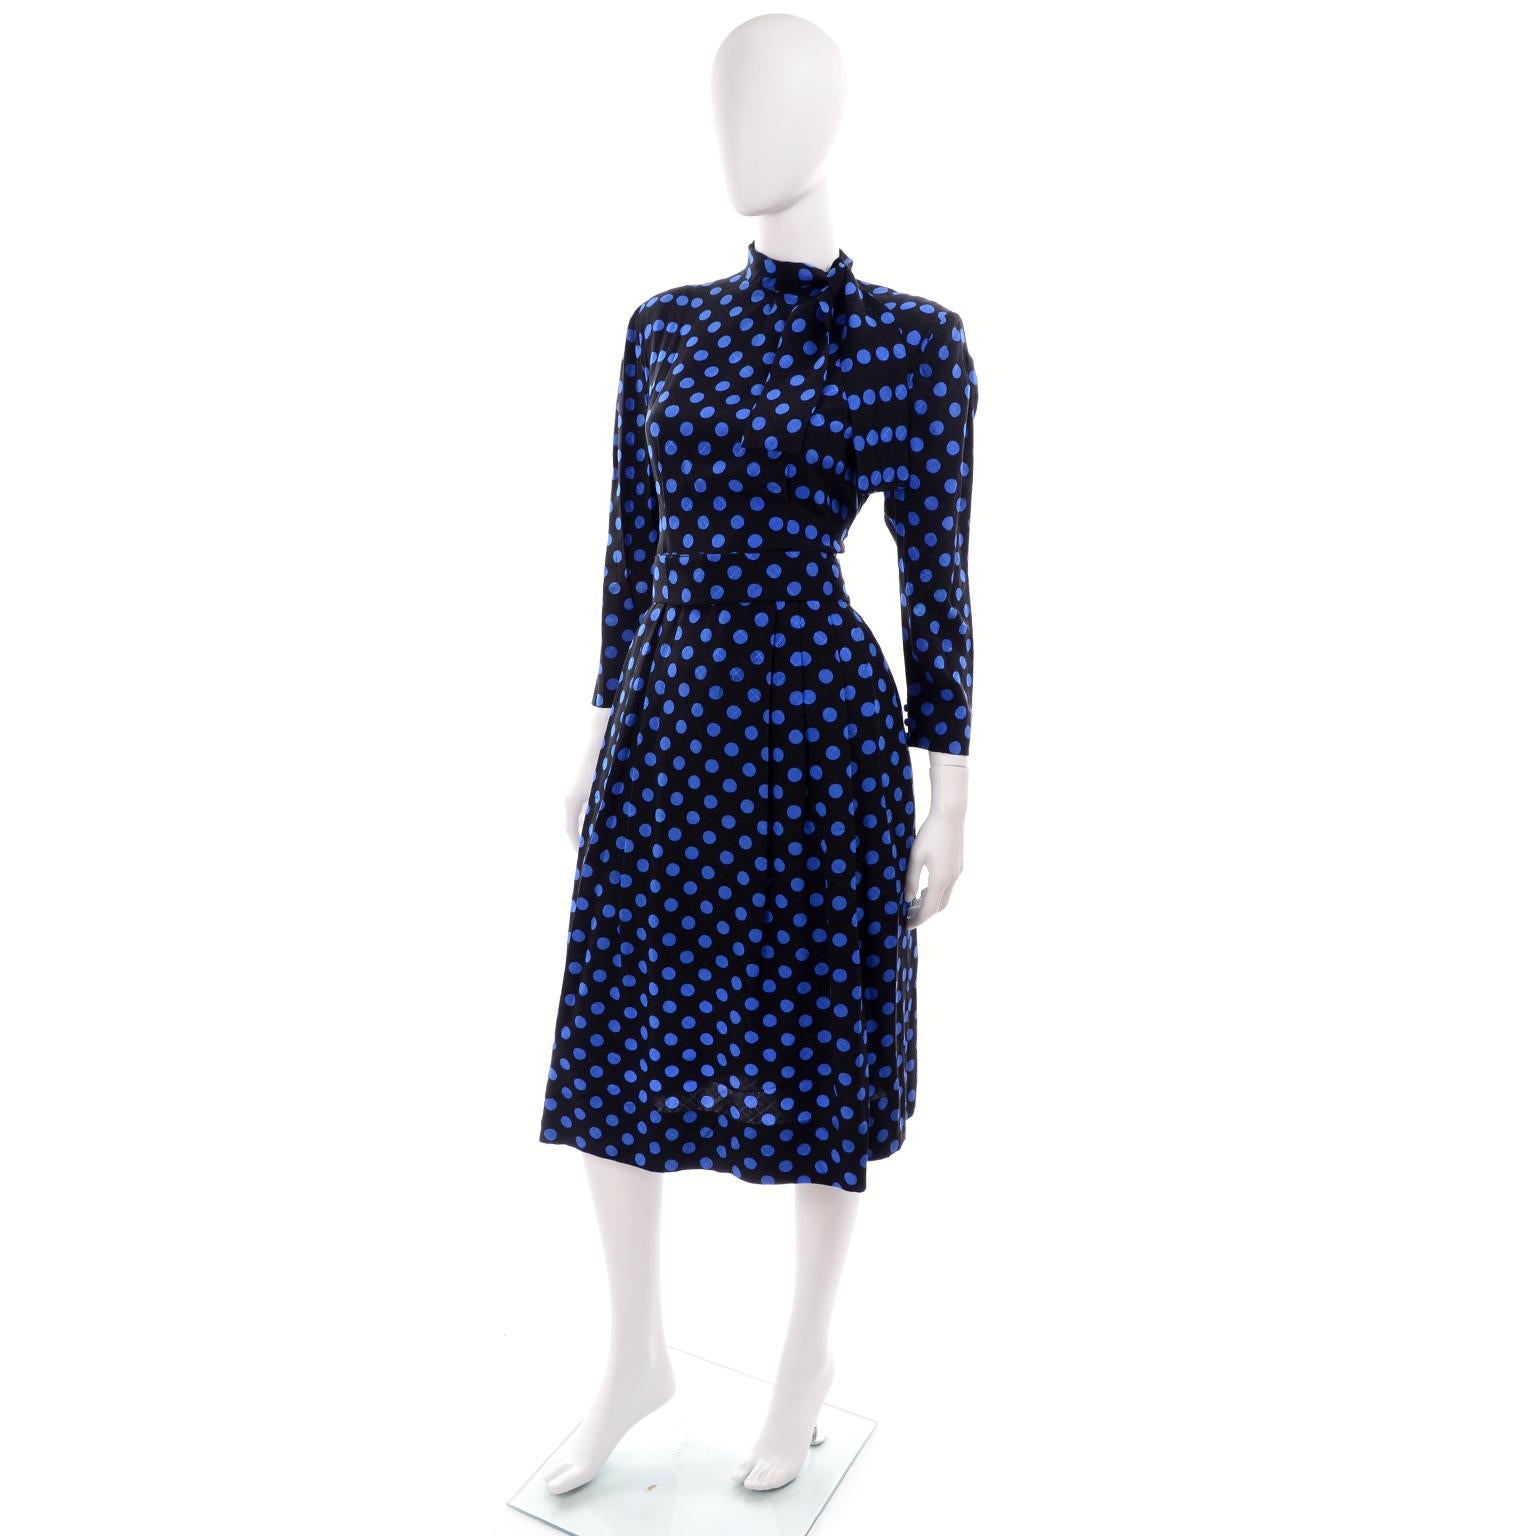 blue dress with black polka dots